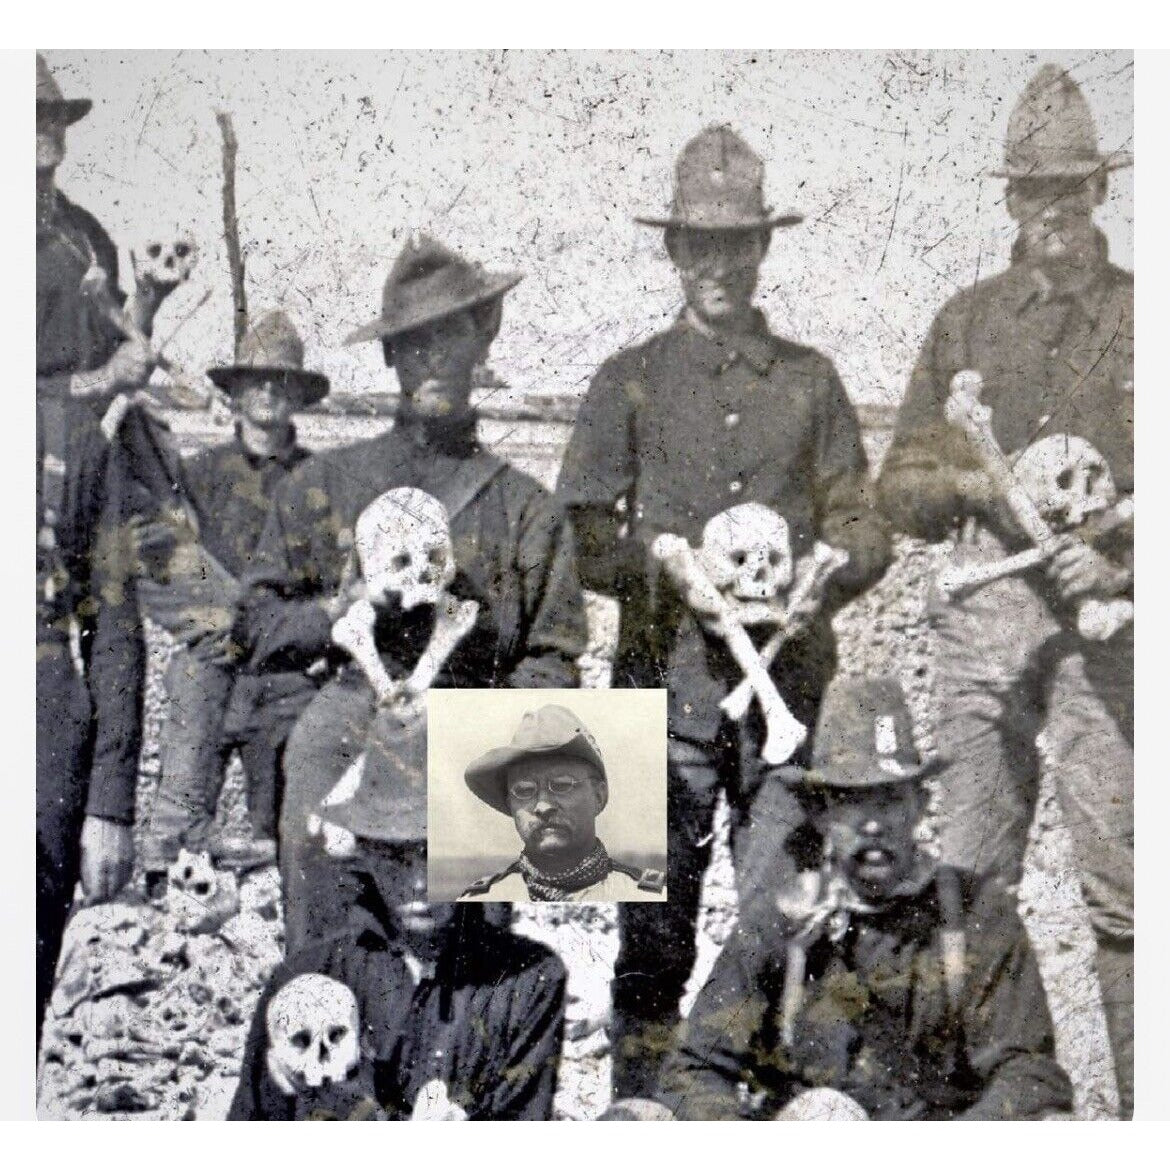 Original Spanish-American War Rough Riders Photo Colon Boneyard Teddy?